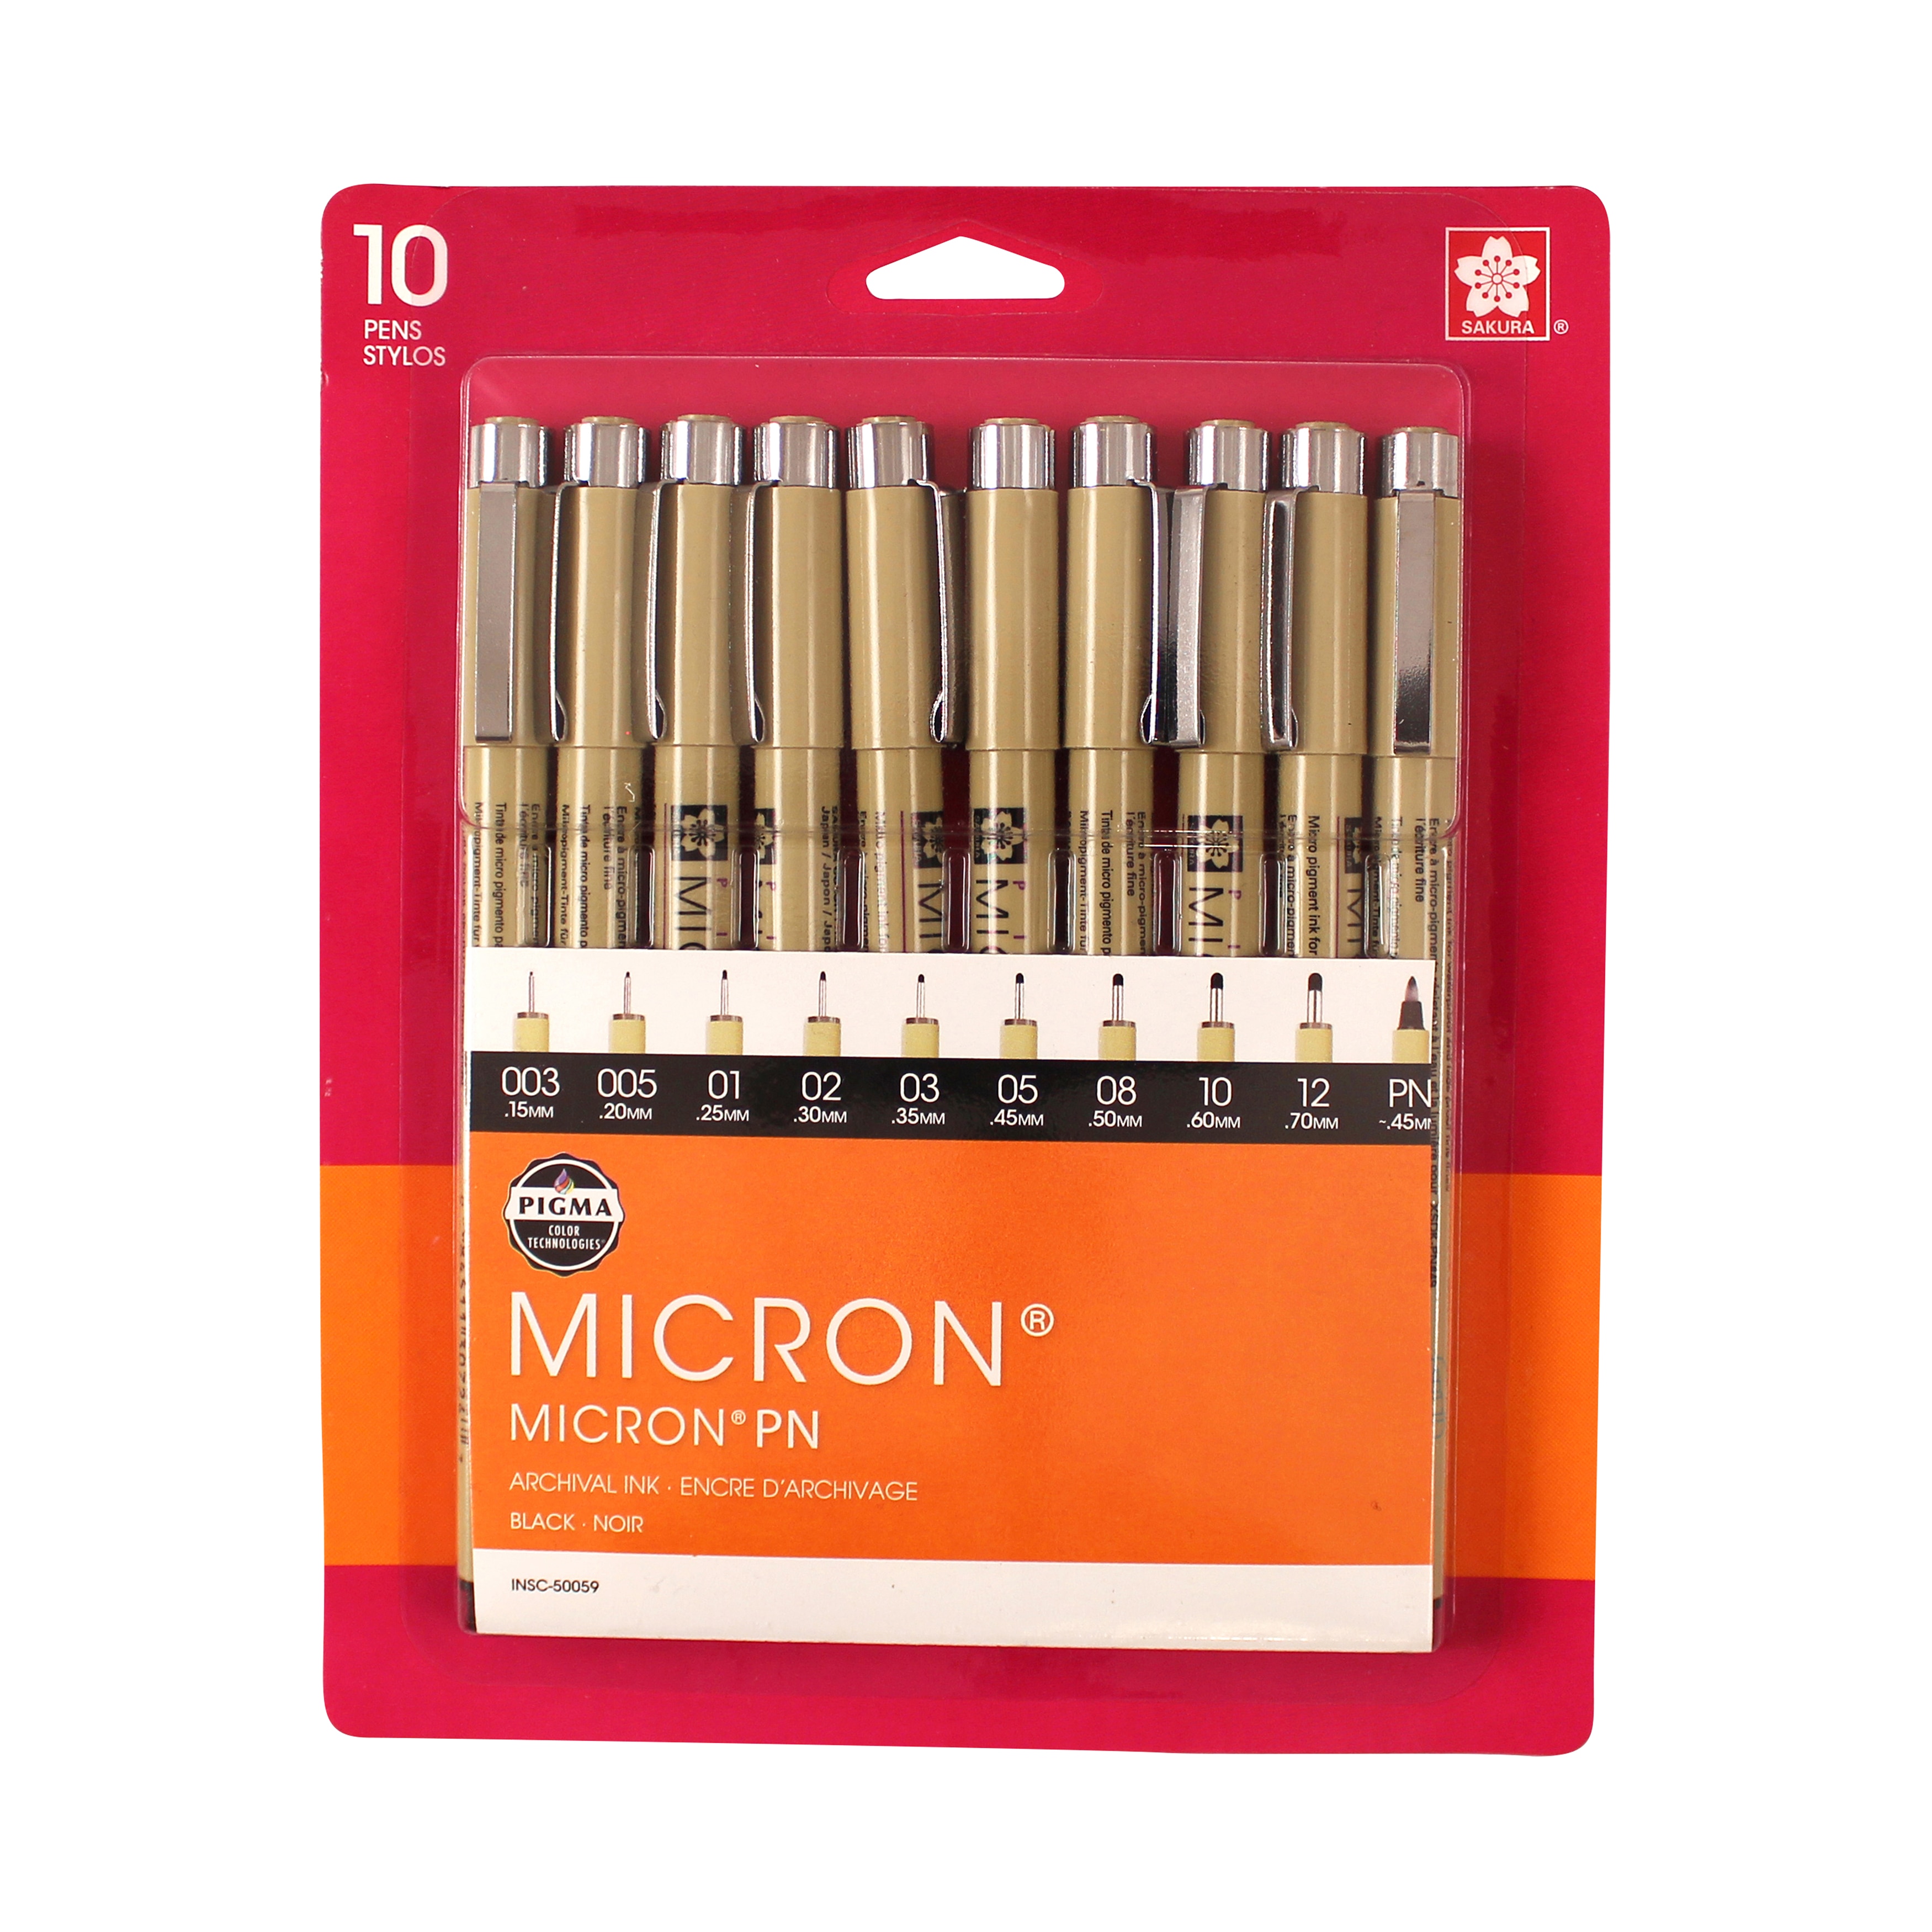 Micron Pen Set of 10